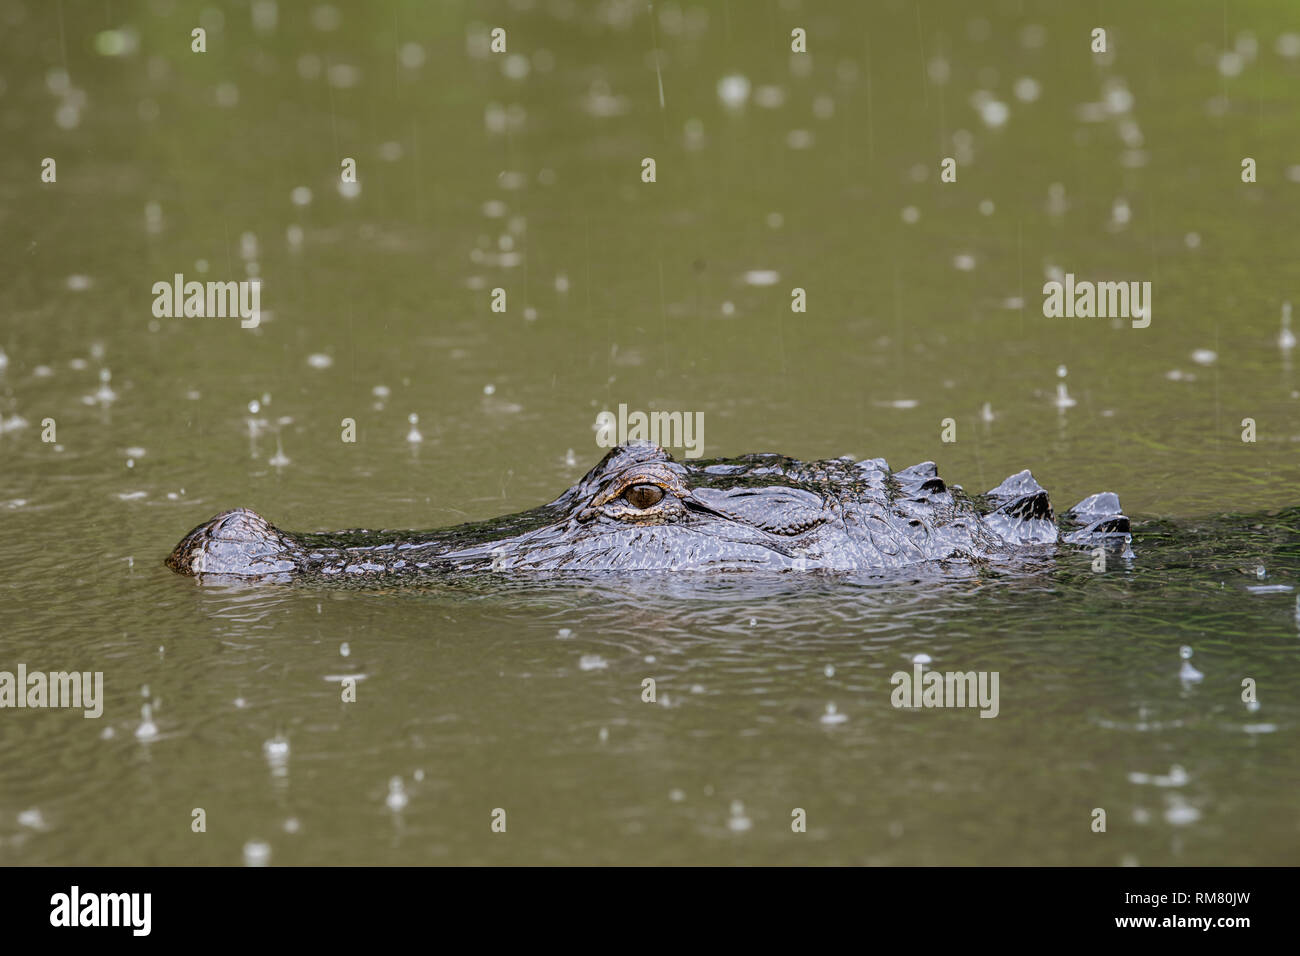 American Alligator in wild Stock Photo